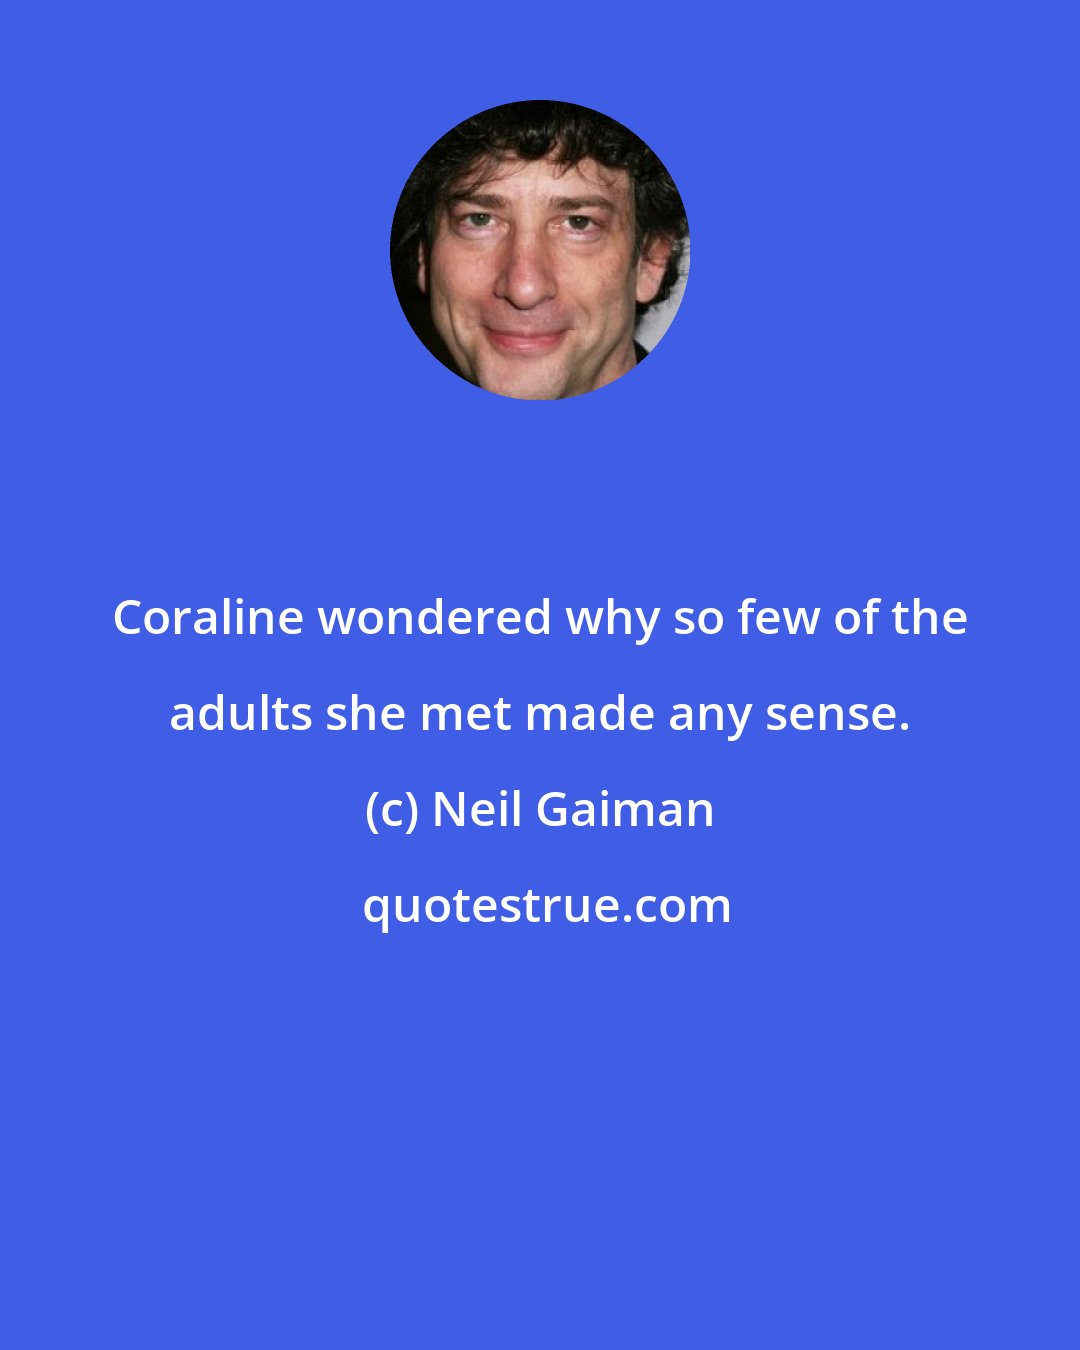 Neil Gaiman: Coraline wondered why so few of the adults she met made any sense.